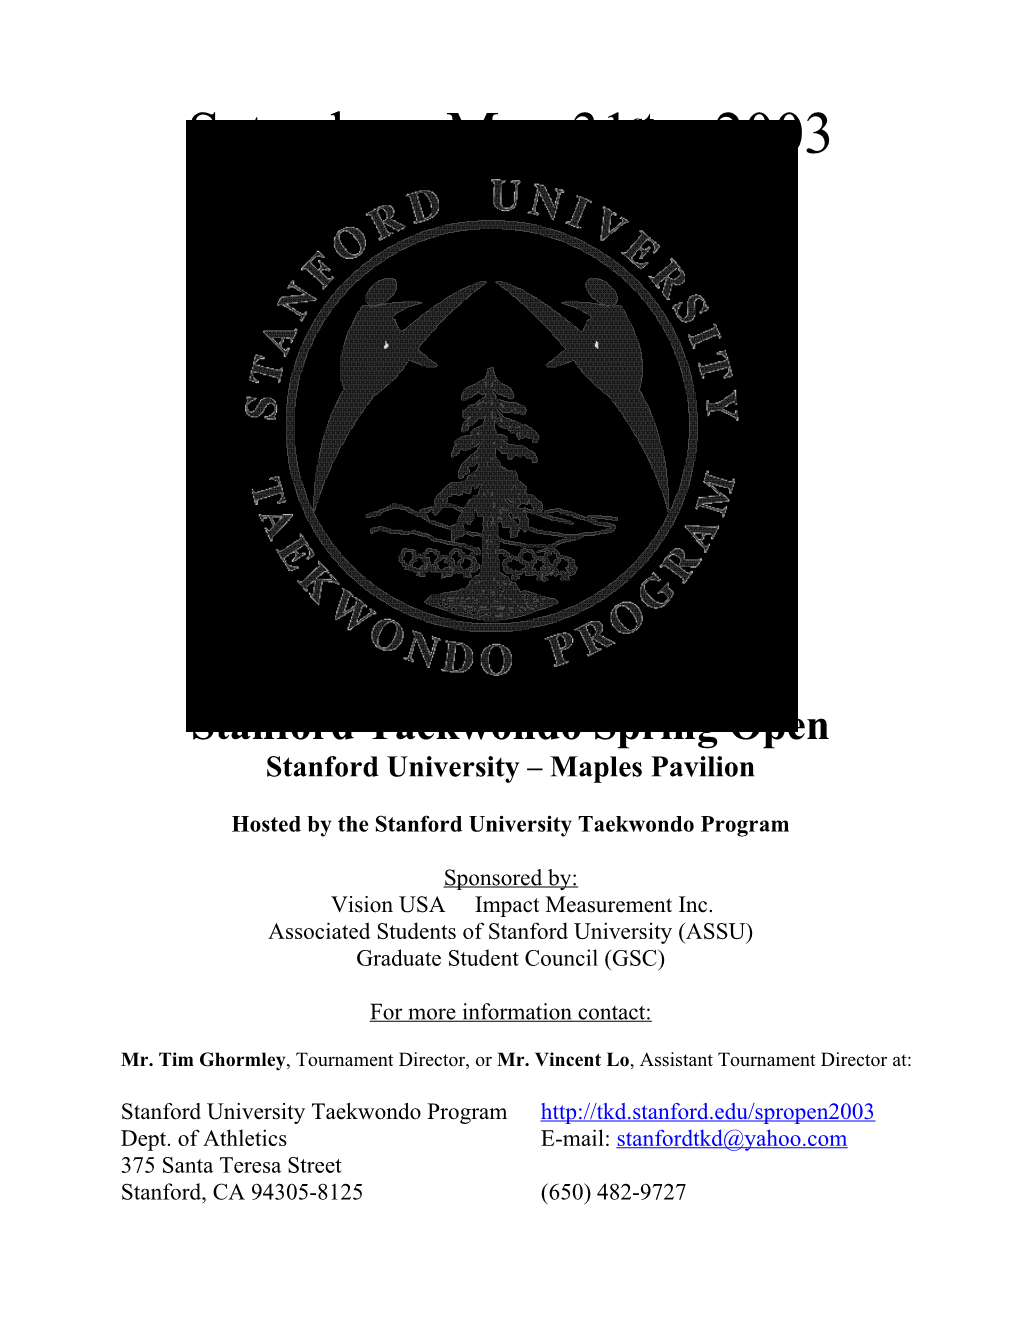 Stanford Taekwondo Spring Open 2003 Registration Packet